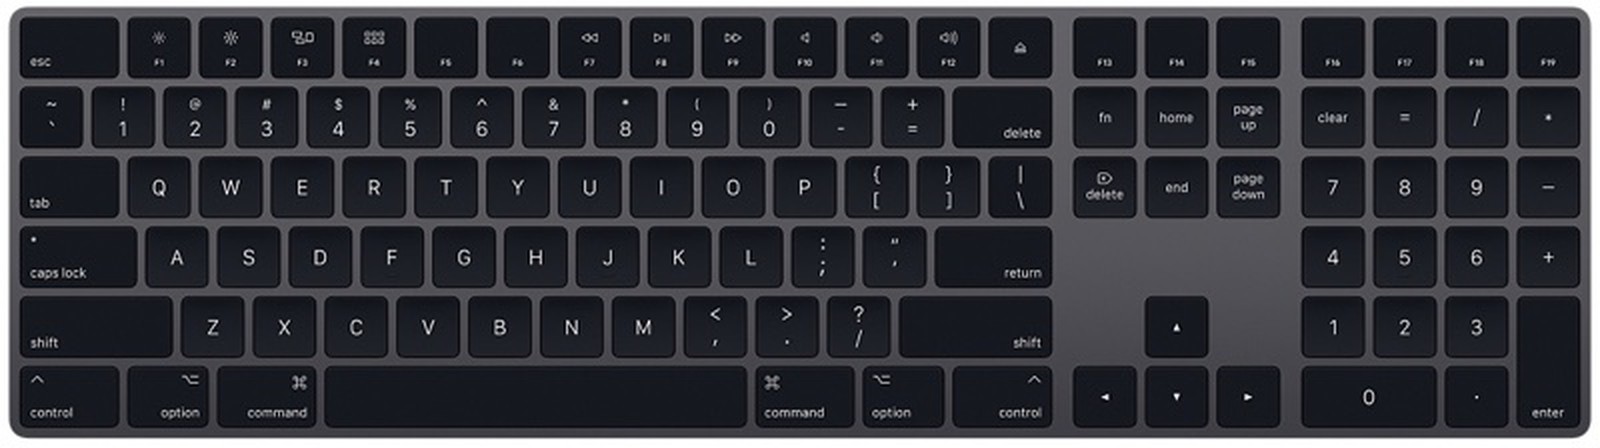 Magic Keyboard gris espacial